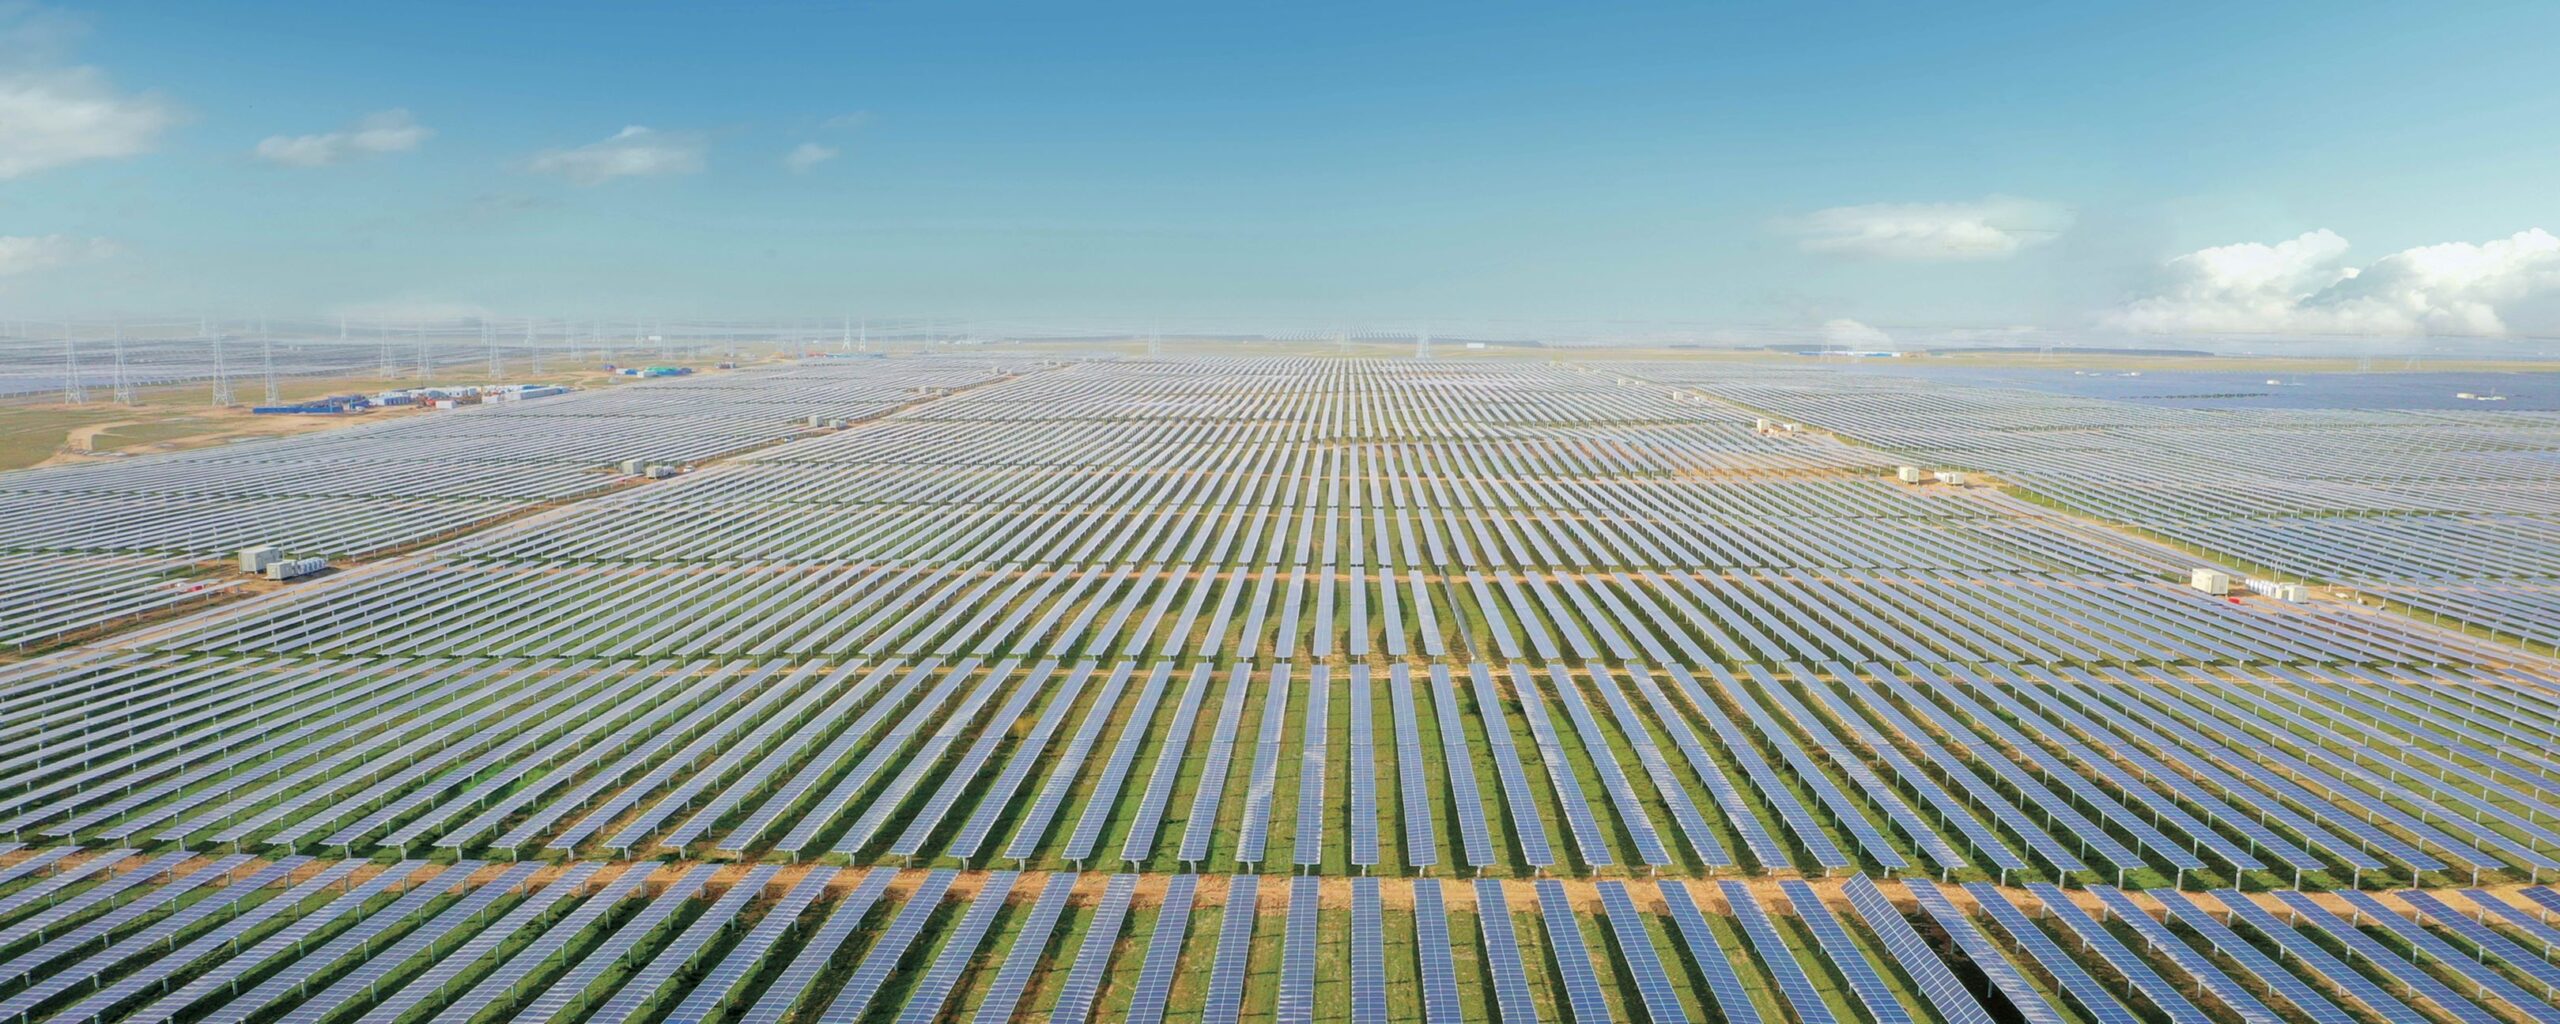 Huawei solar, ηλιακή ενέργεια νέας γενιάς